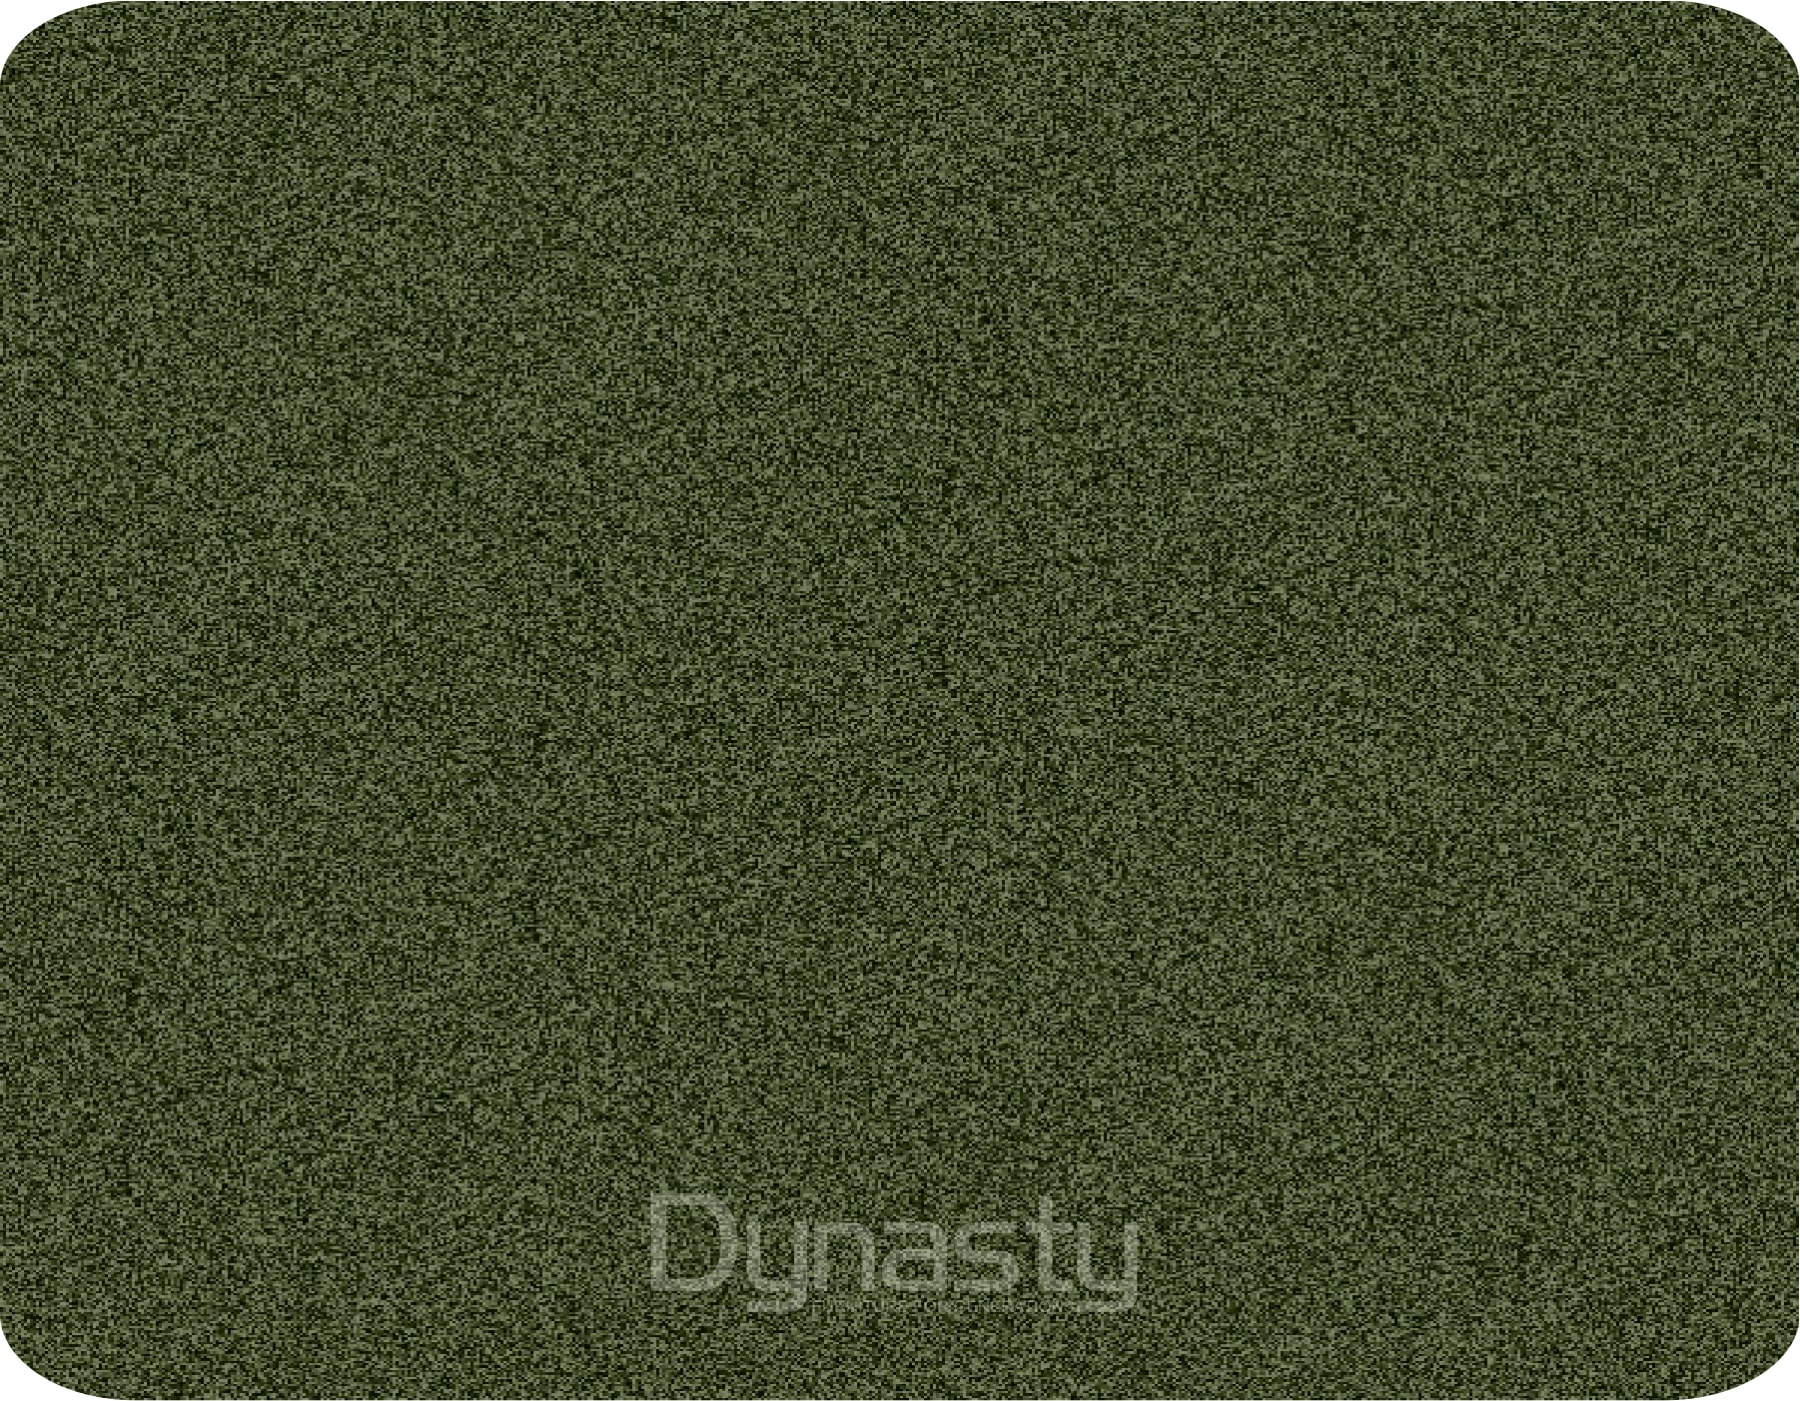 DPU-003-Olive green Sparkle